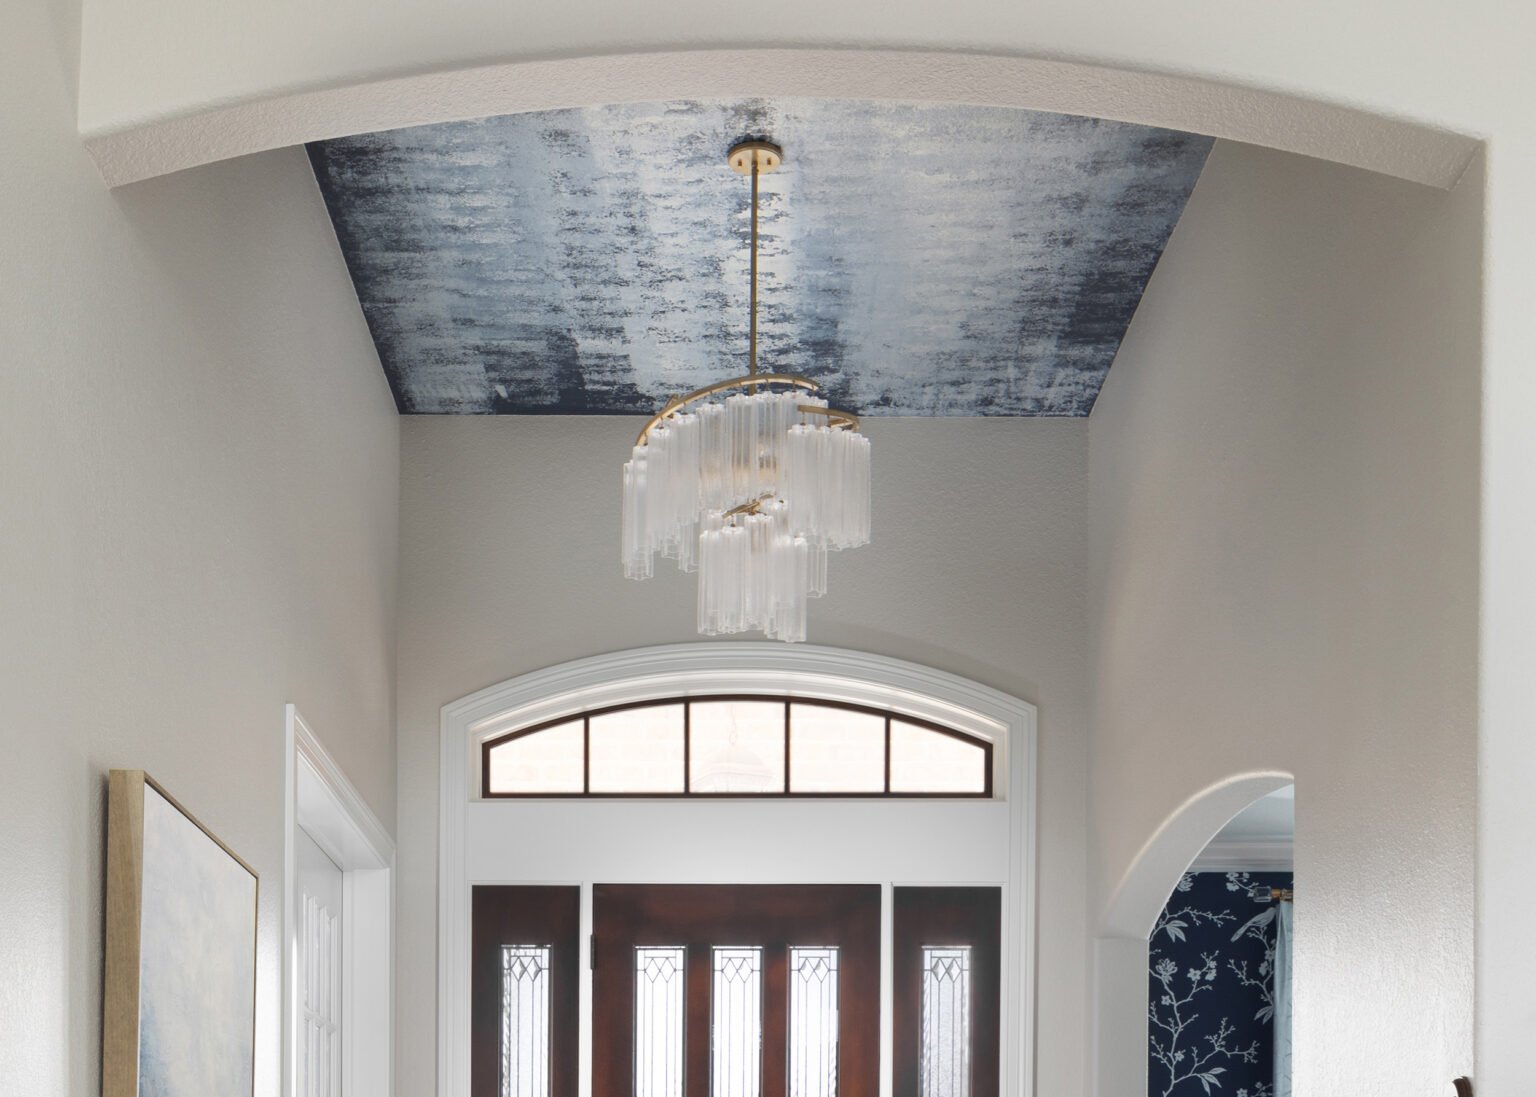 wallpaper on ceiling for interior design